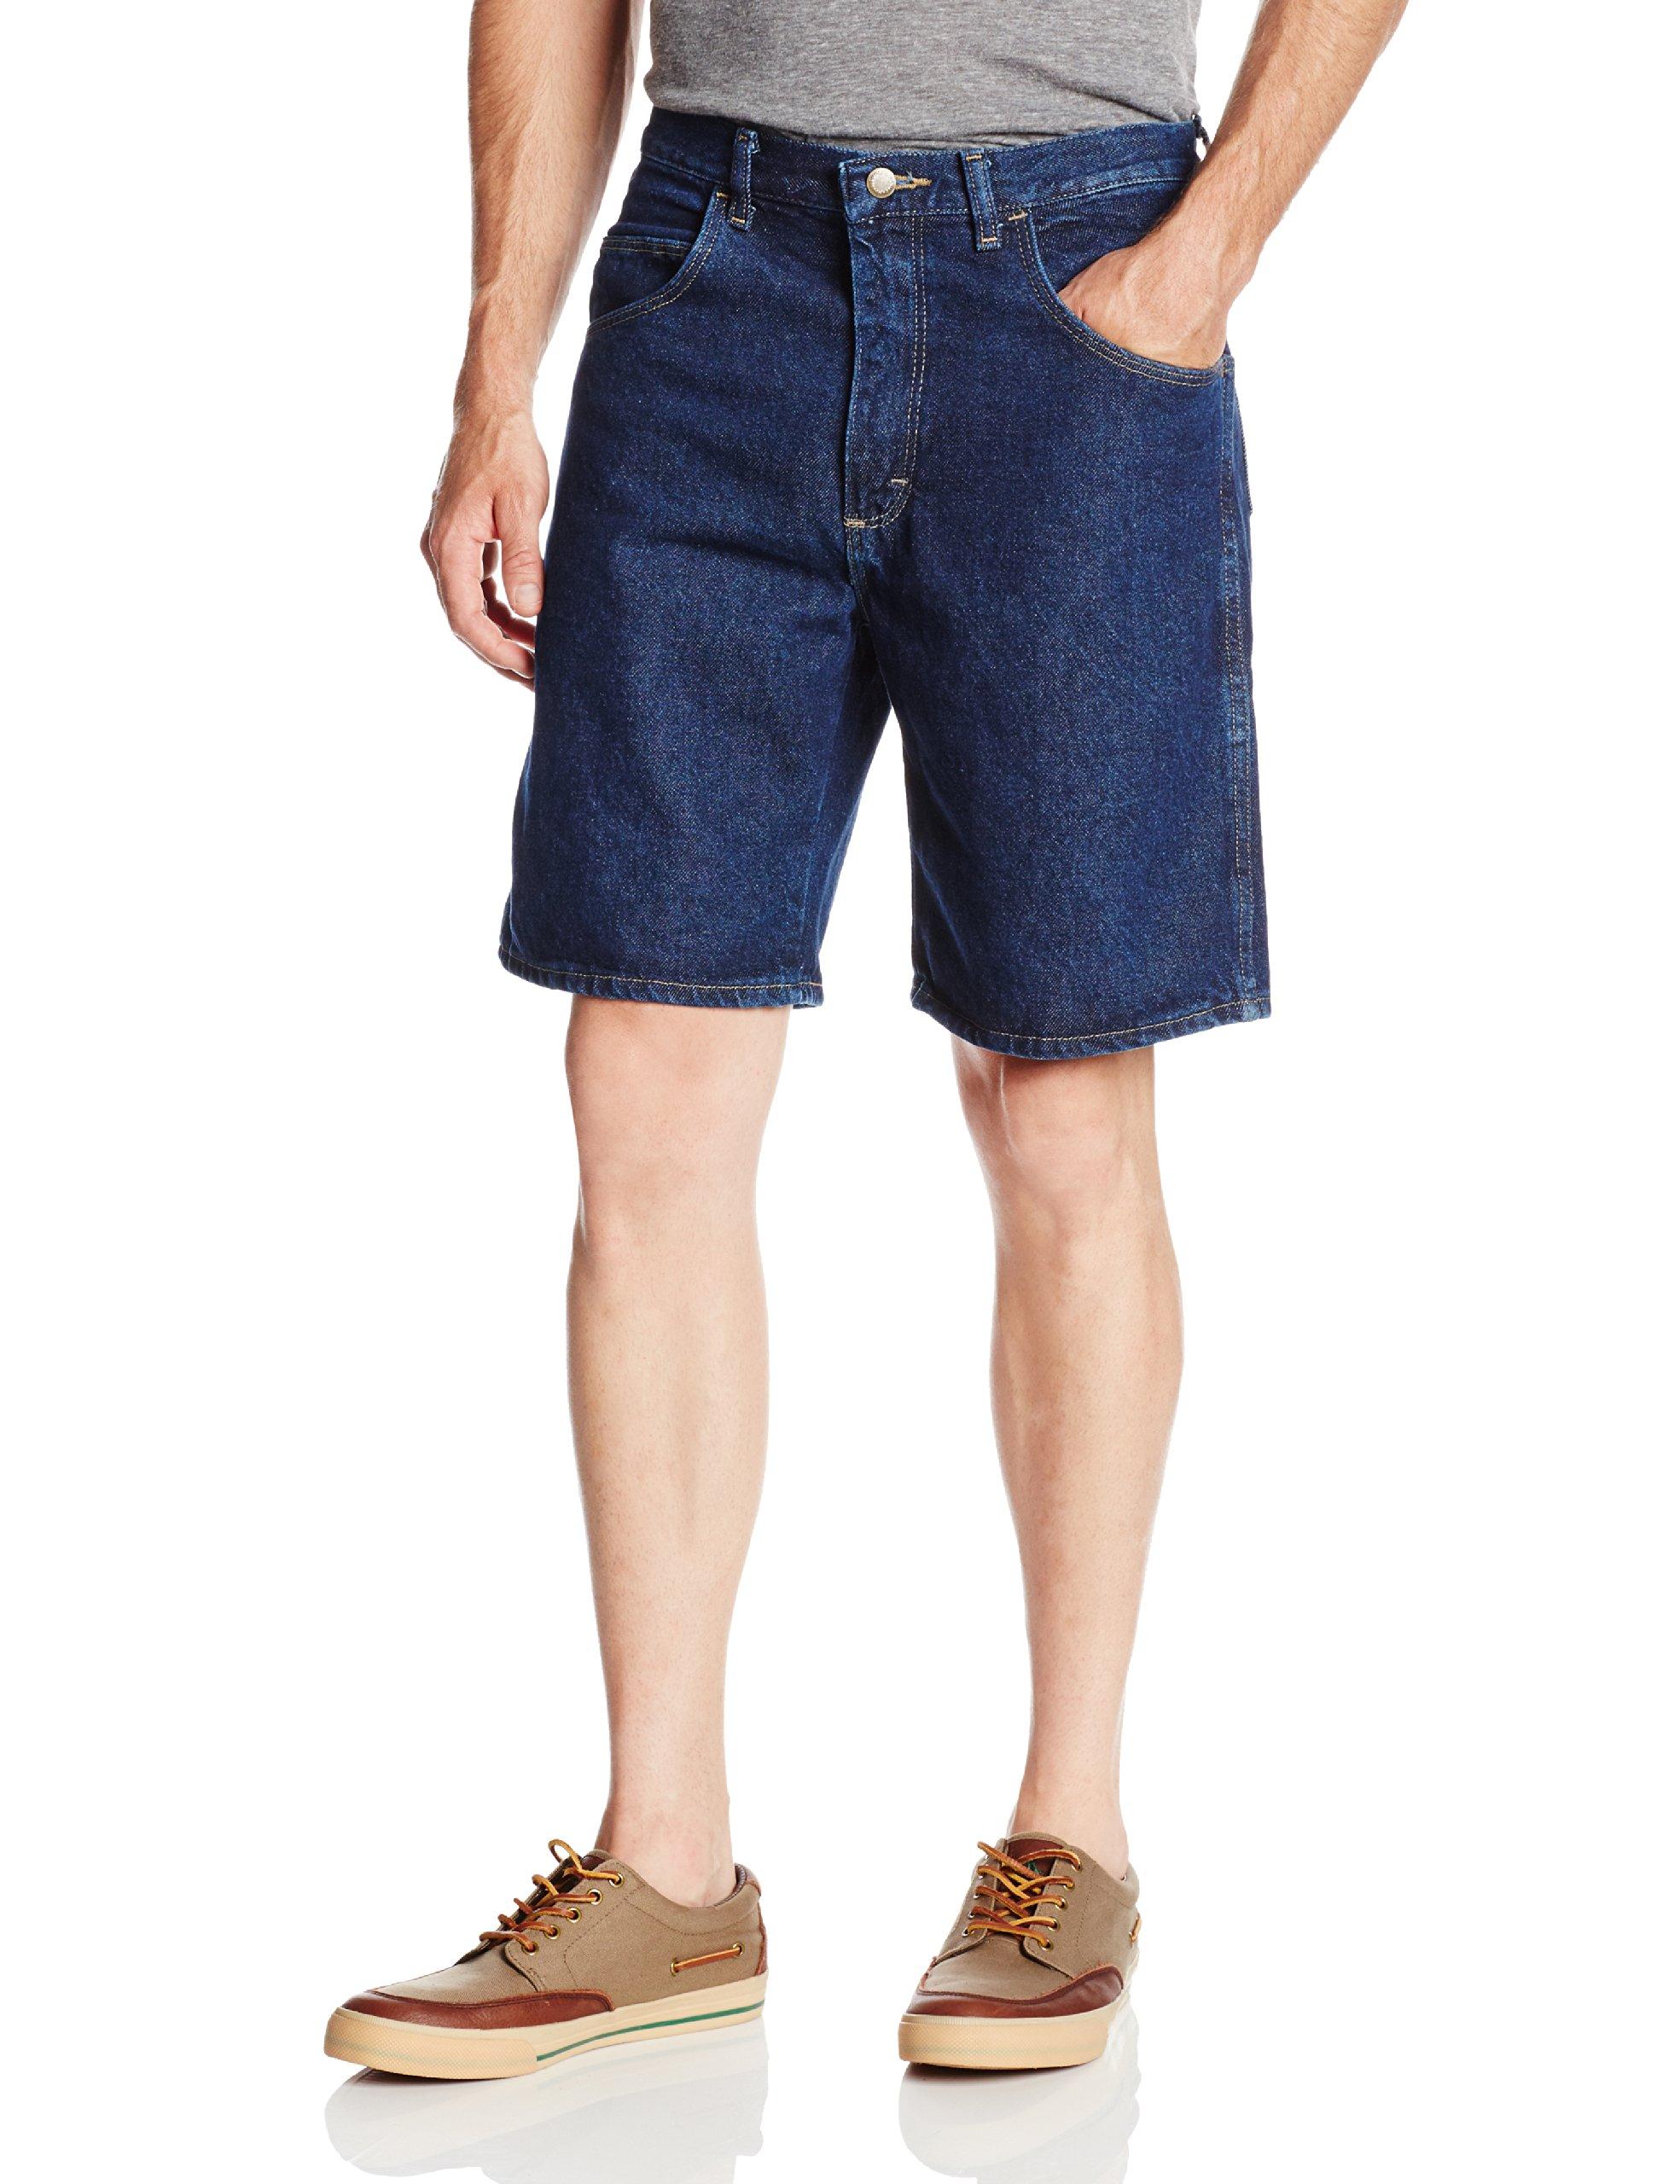 Wrangler Denim Rugged Wear Relaxed Fit Short in Blue for Men - Save 20% ...